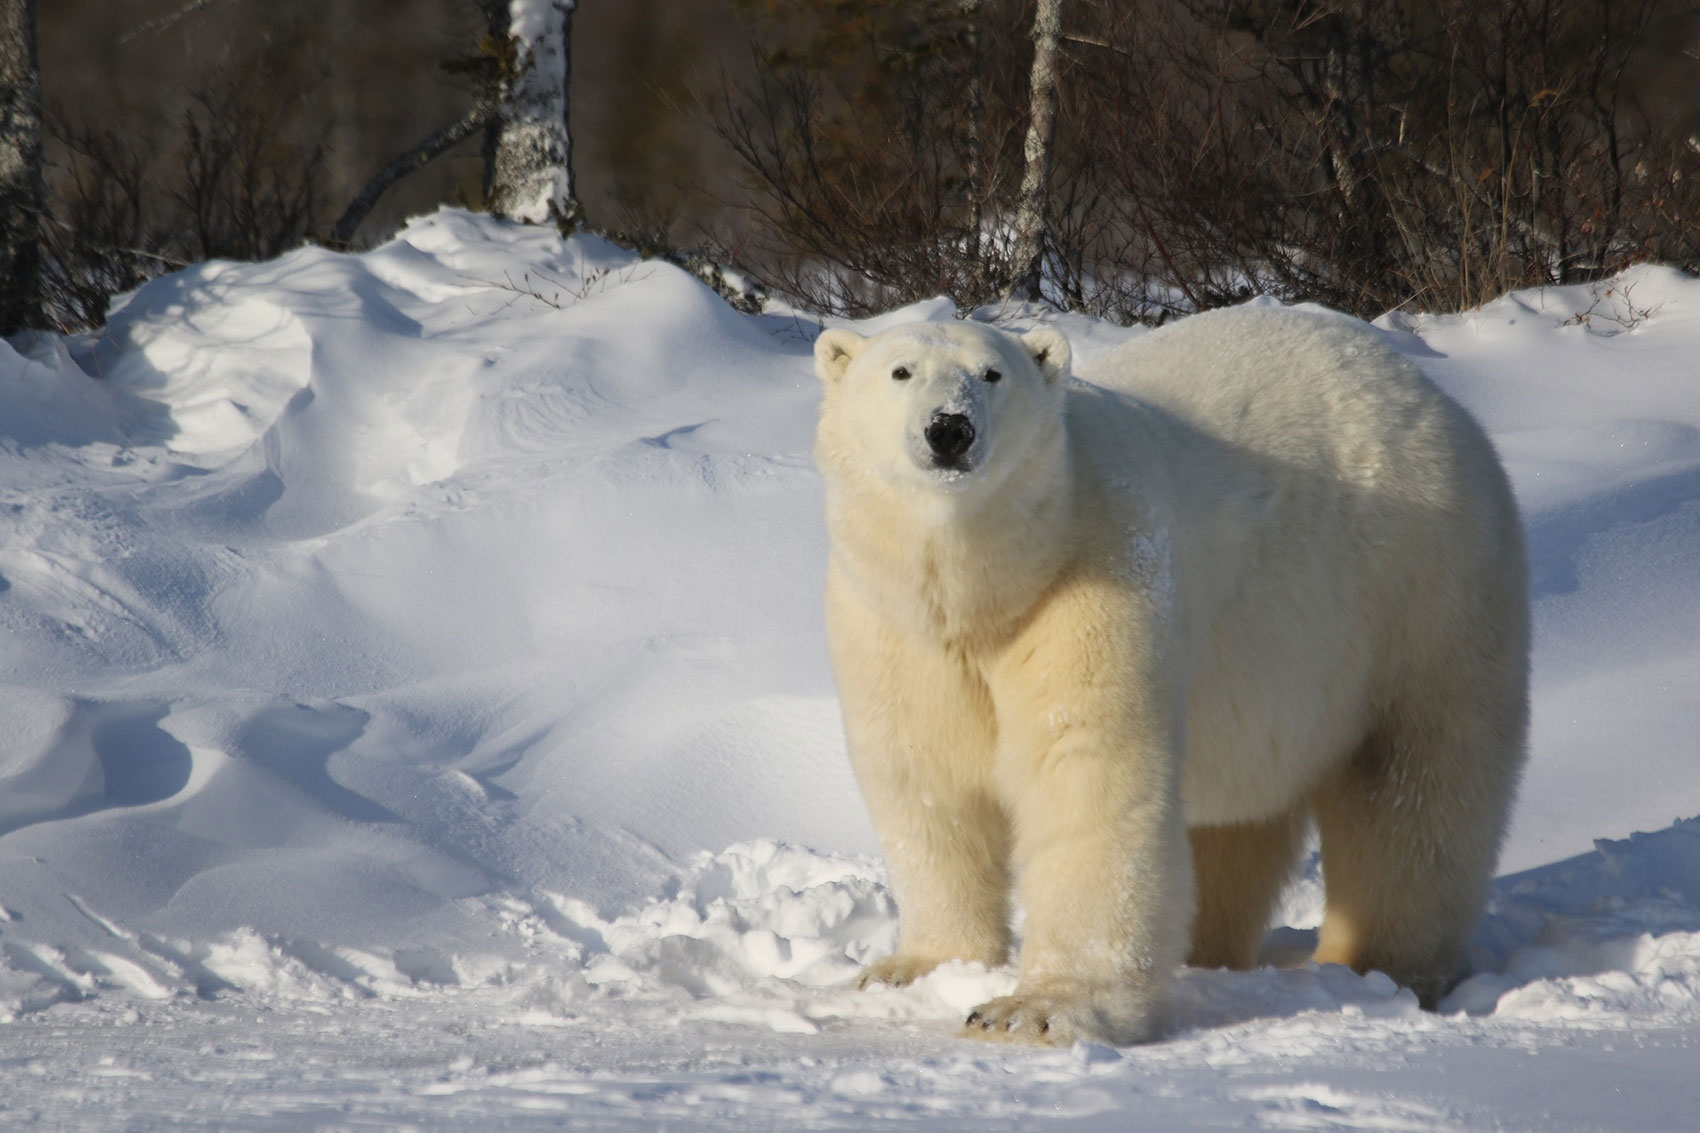 Polar bear in the boreal forest. Dymond Lake Ecolodge. Lukas Pindel photo.